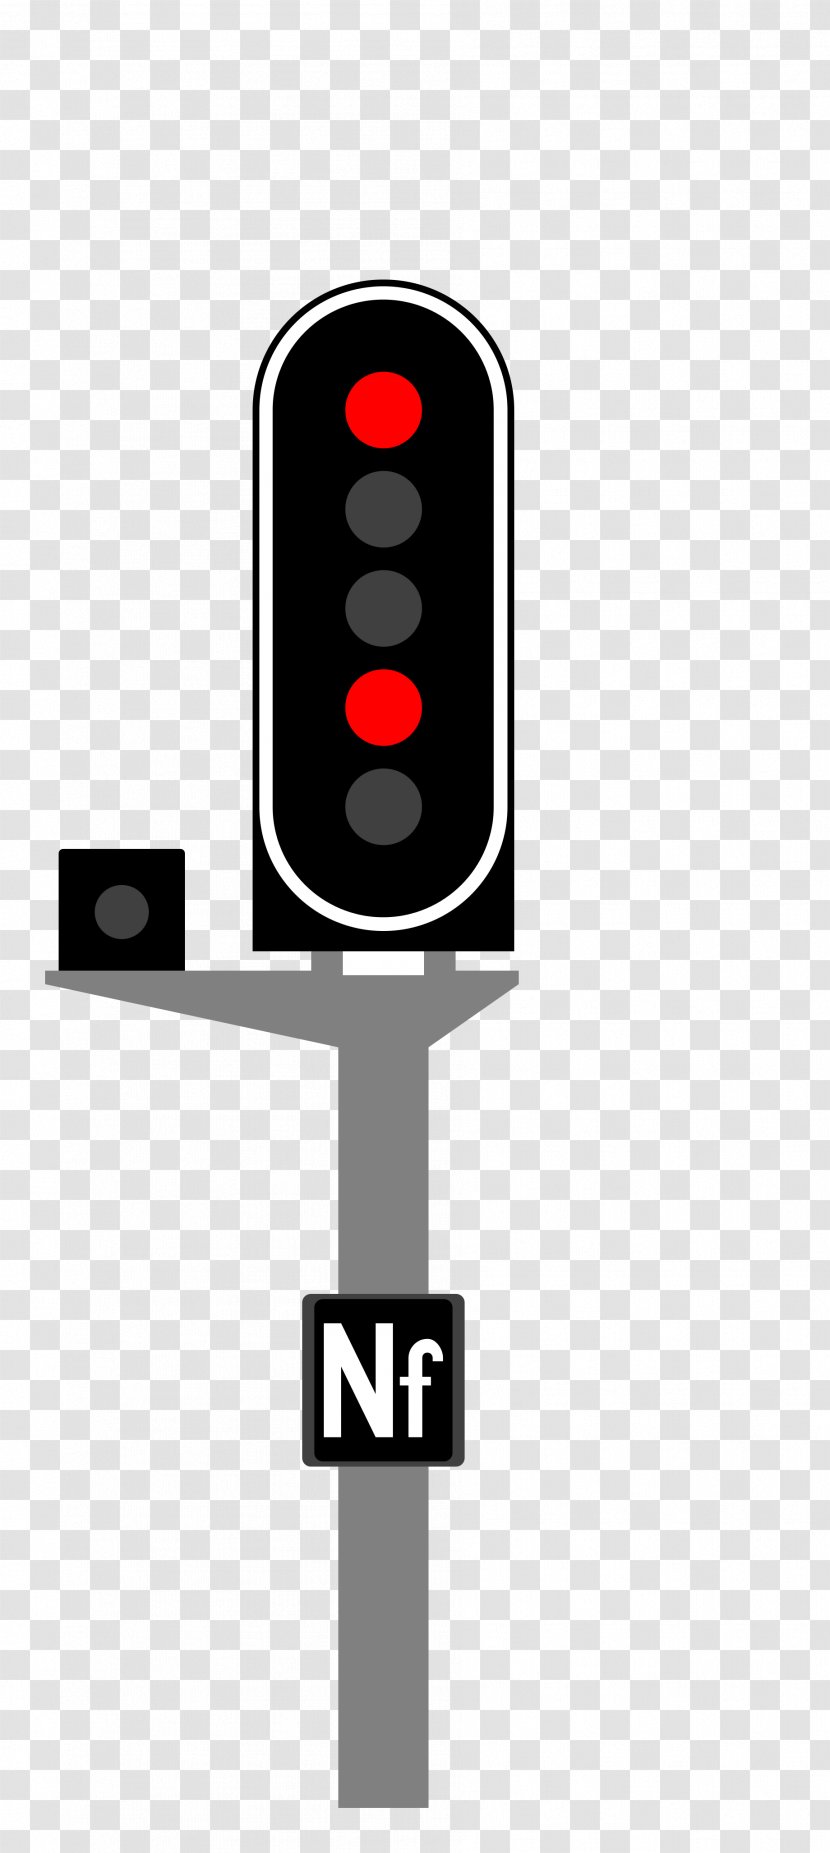 Train French Railway Signalling Carré Semaphore Signal - Traffic Light Transparent PNG